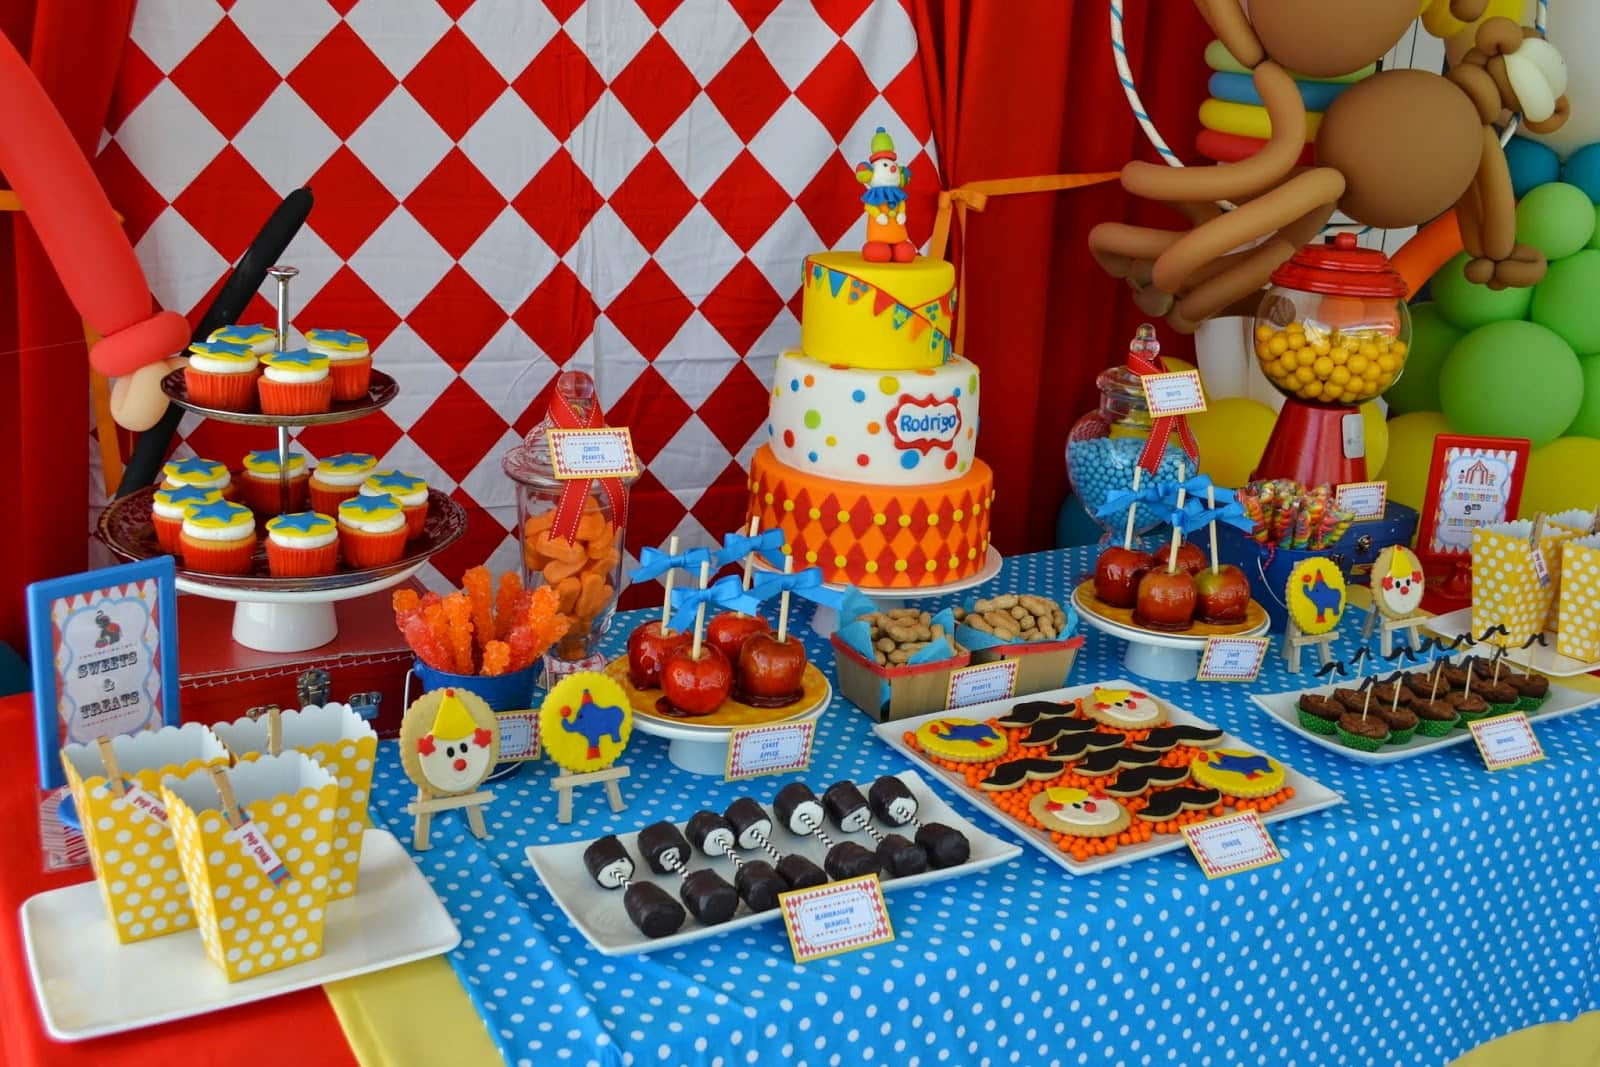 Best ideas about Boys Birthday Party Ideas
. Save or Pin 33 Awesome Birthday Party Ideas for Boys Now.